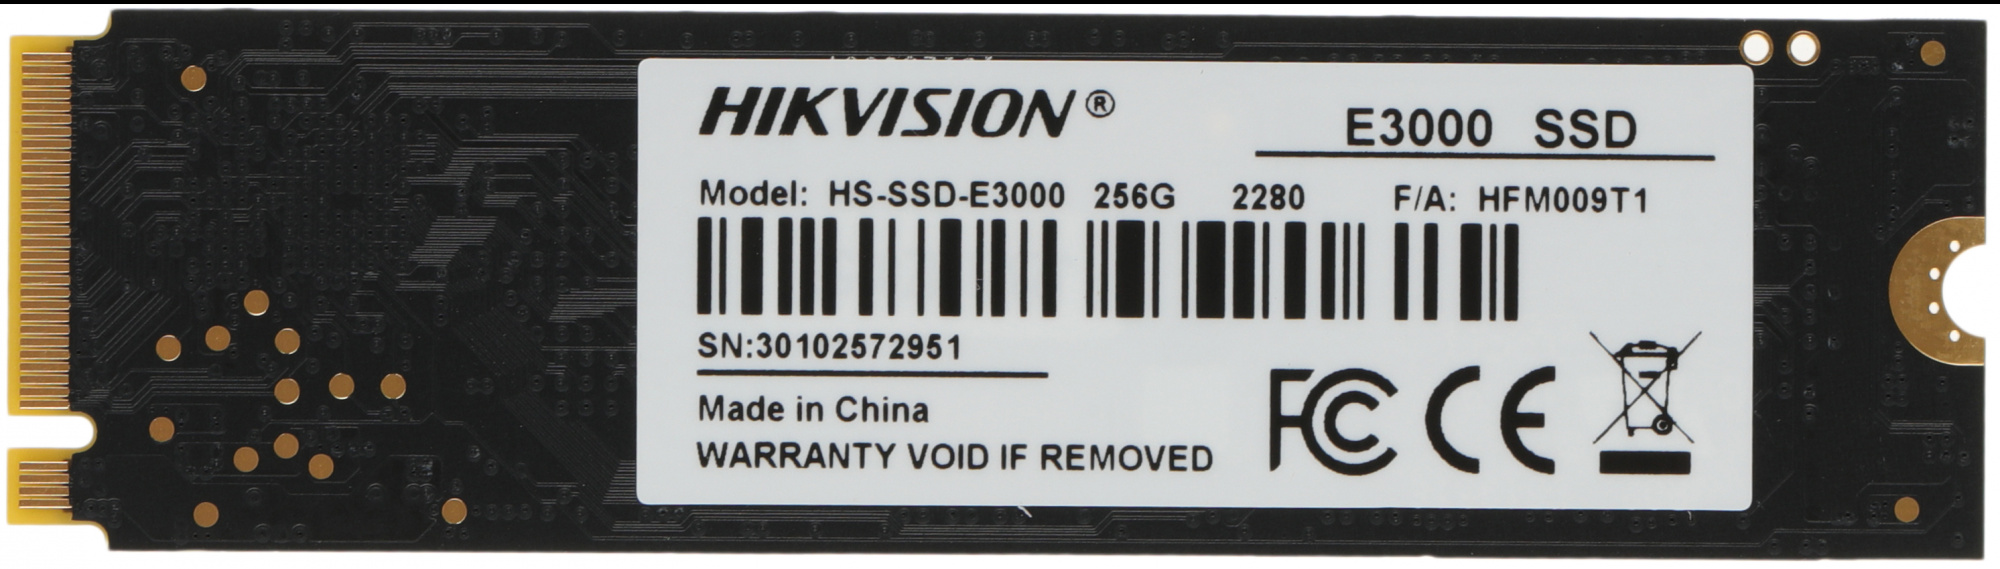 SSD  Hikvision E3000 HS-SSD-E3000/256G Hiksemi 256, M.2 2280, PCIe 3.0 x4,  M.2